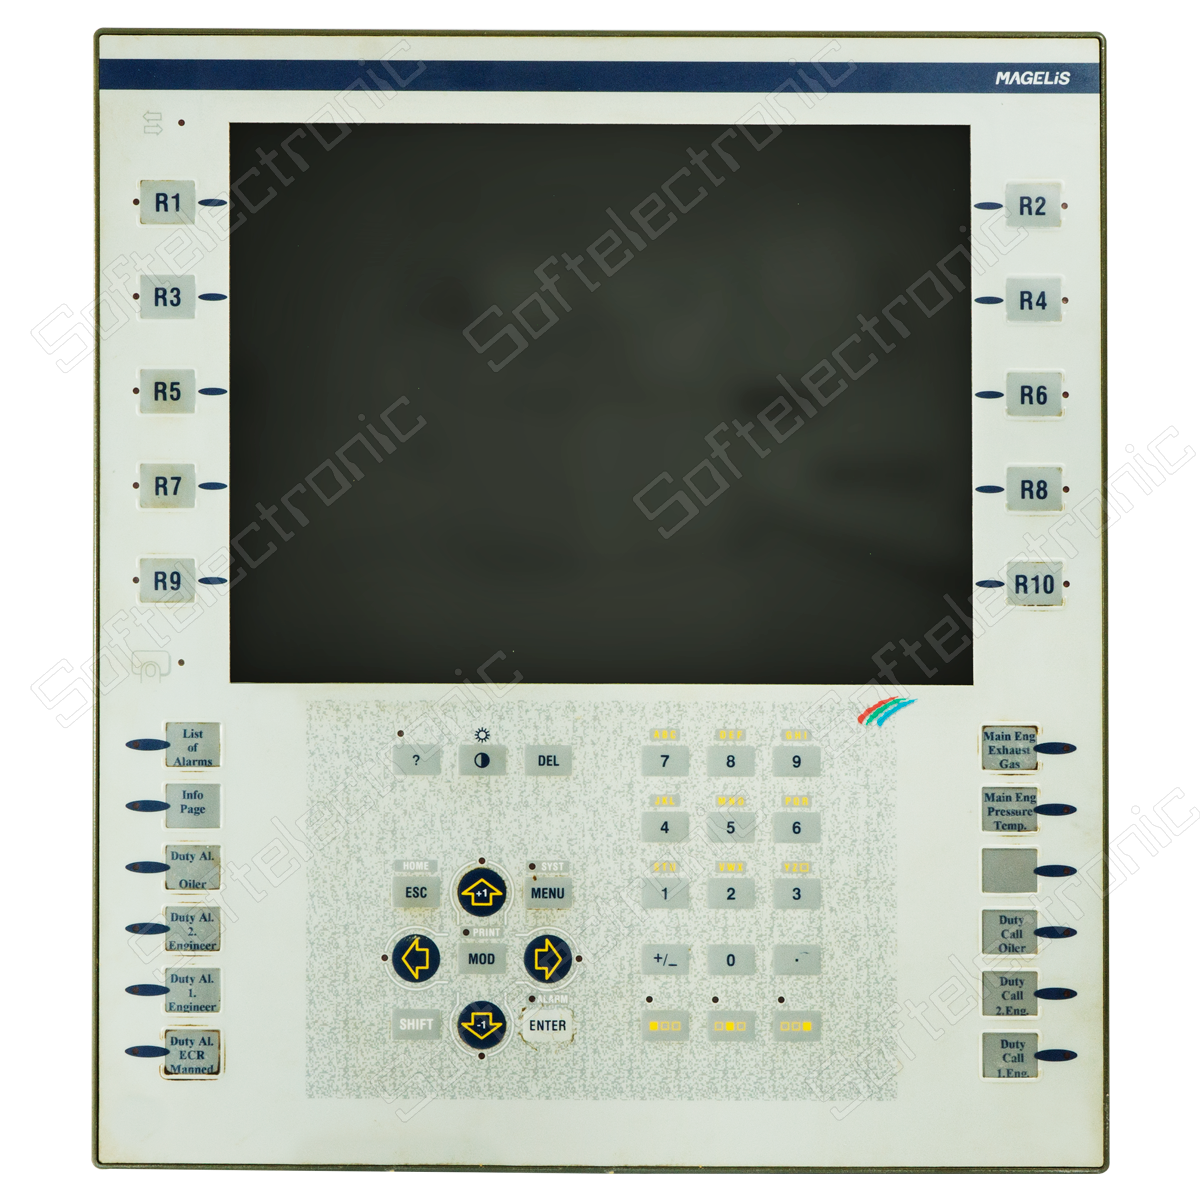 Sistem de alarmă Modicon 984-A120 PLC